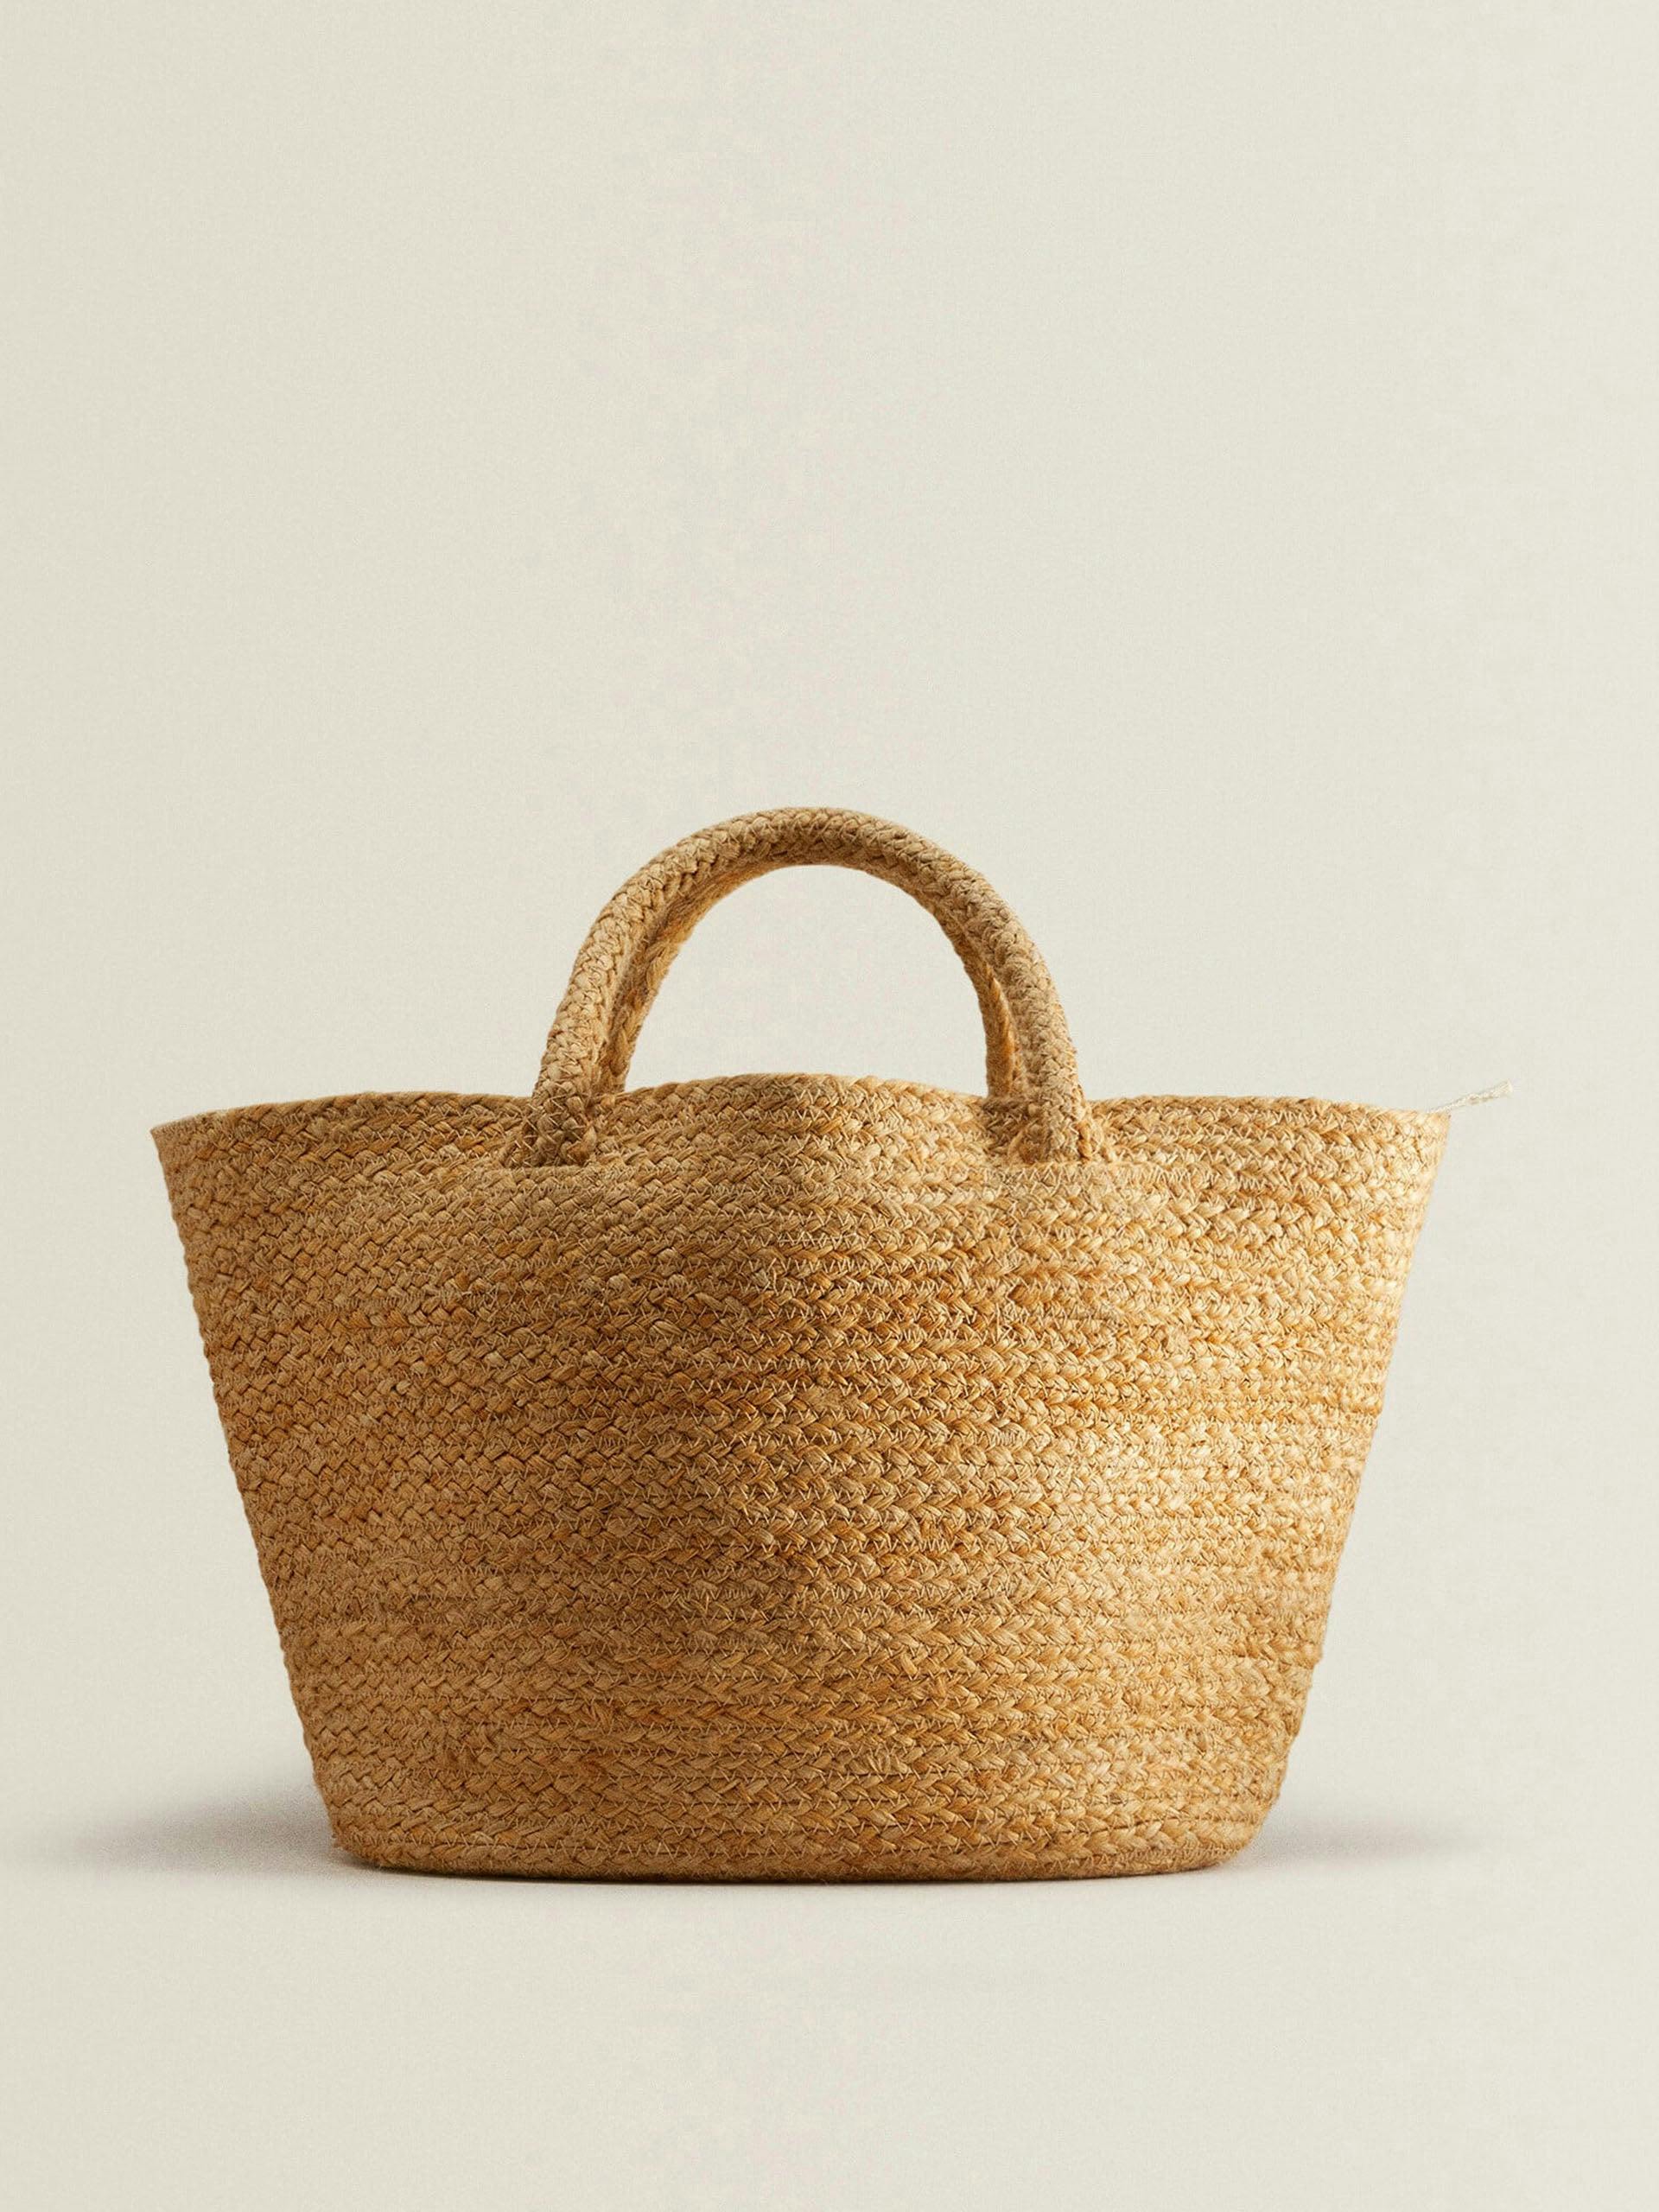 Jute basket bag with linen pouch